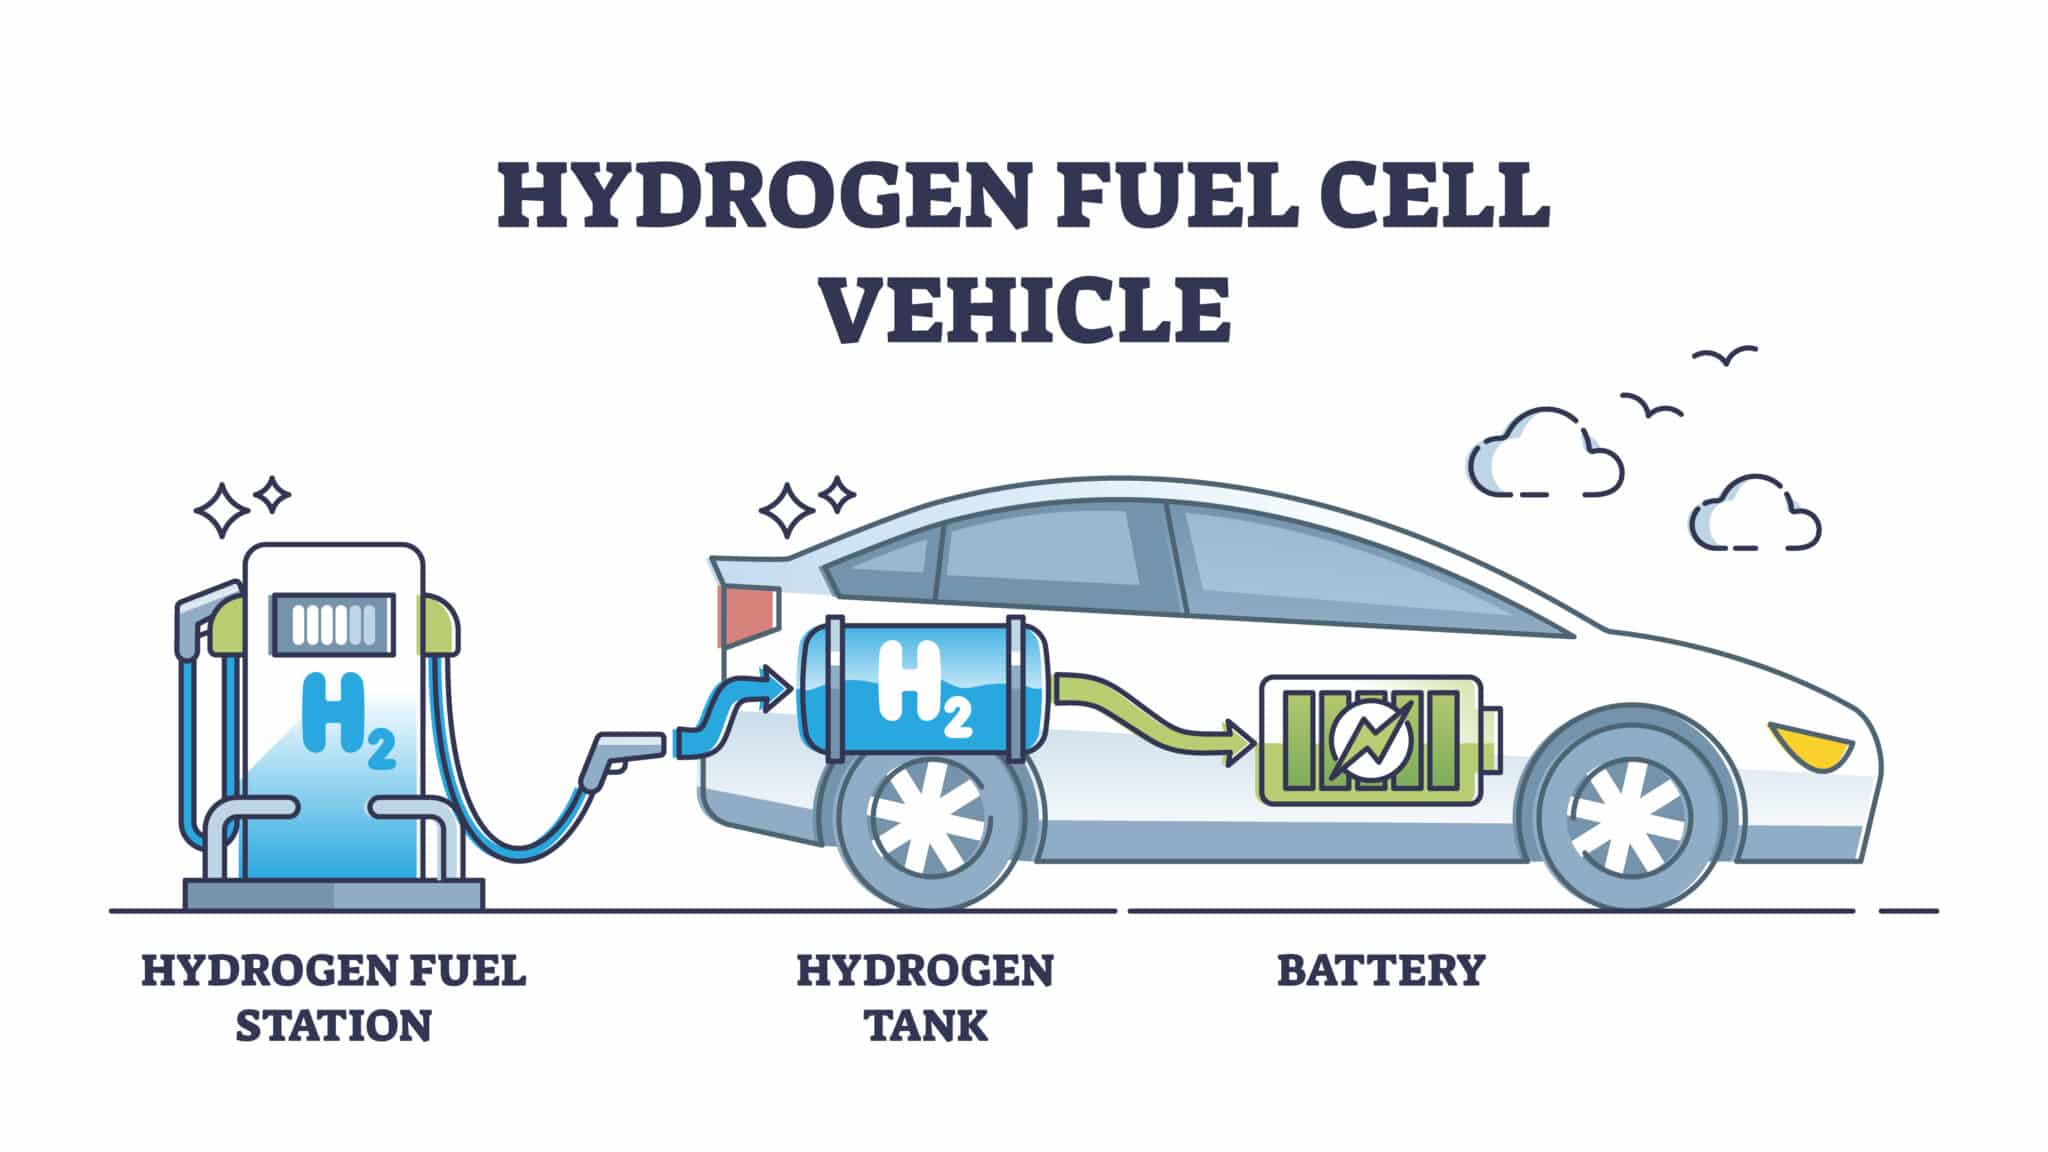 Schema idrogeno fuel cell